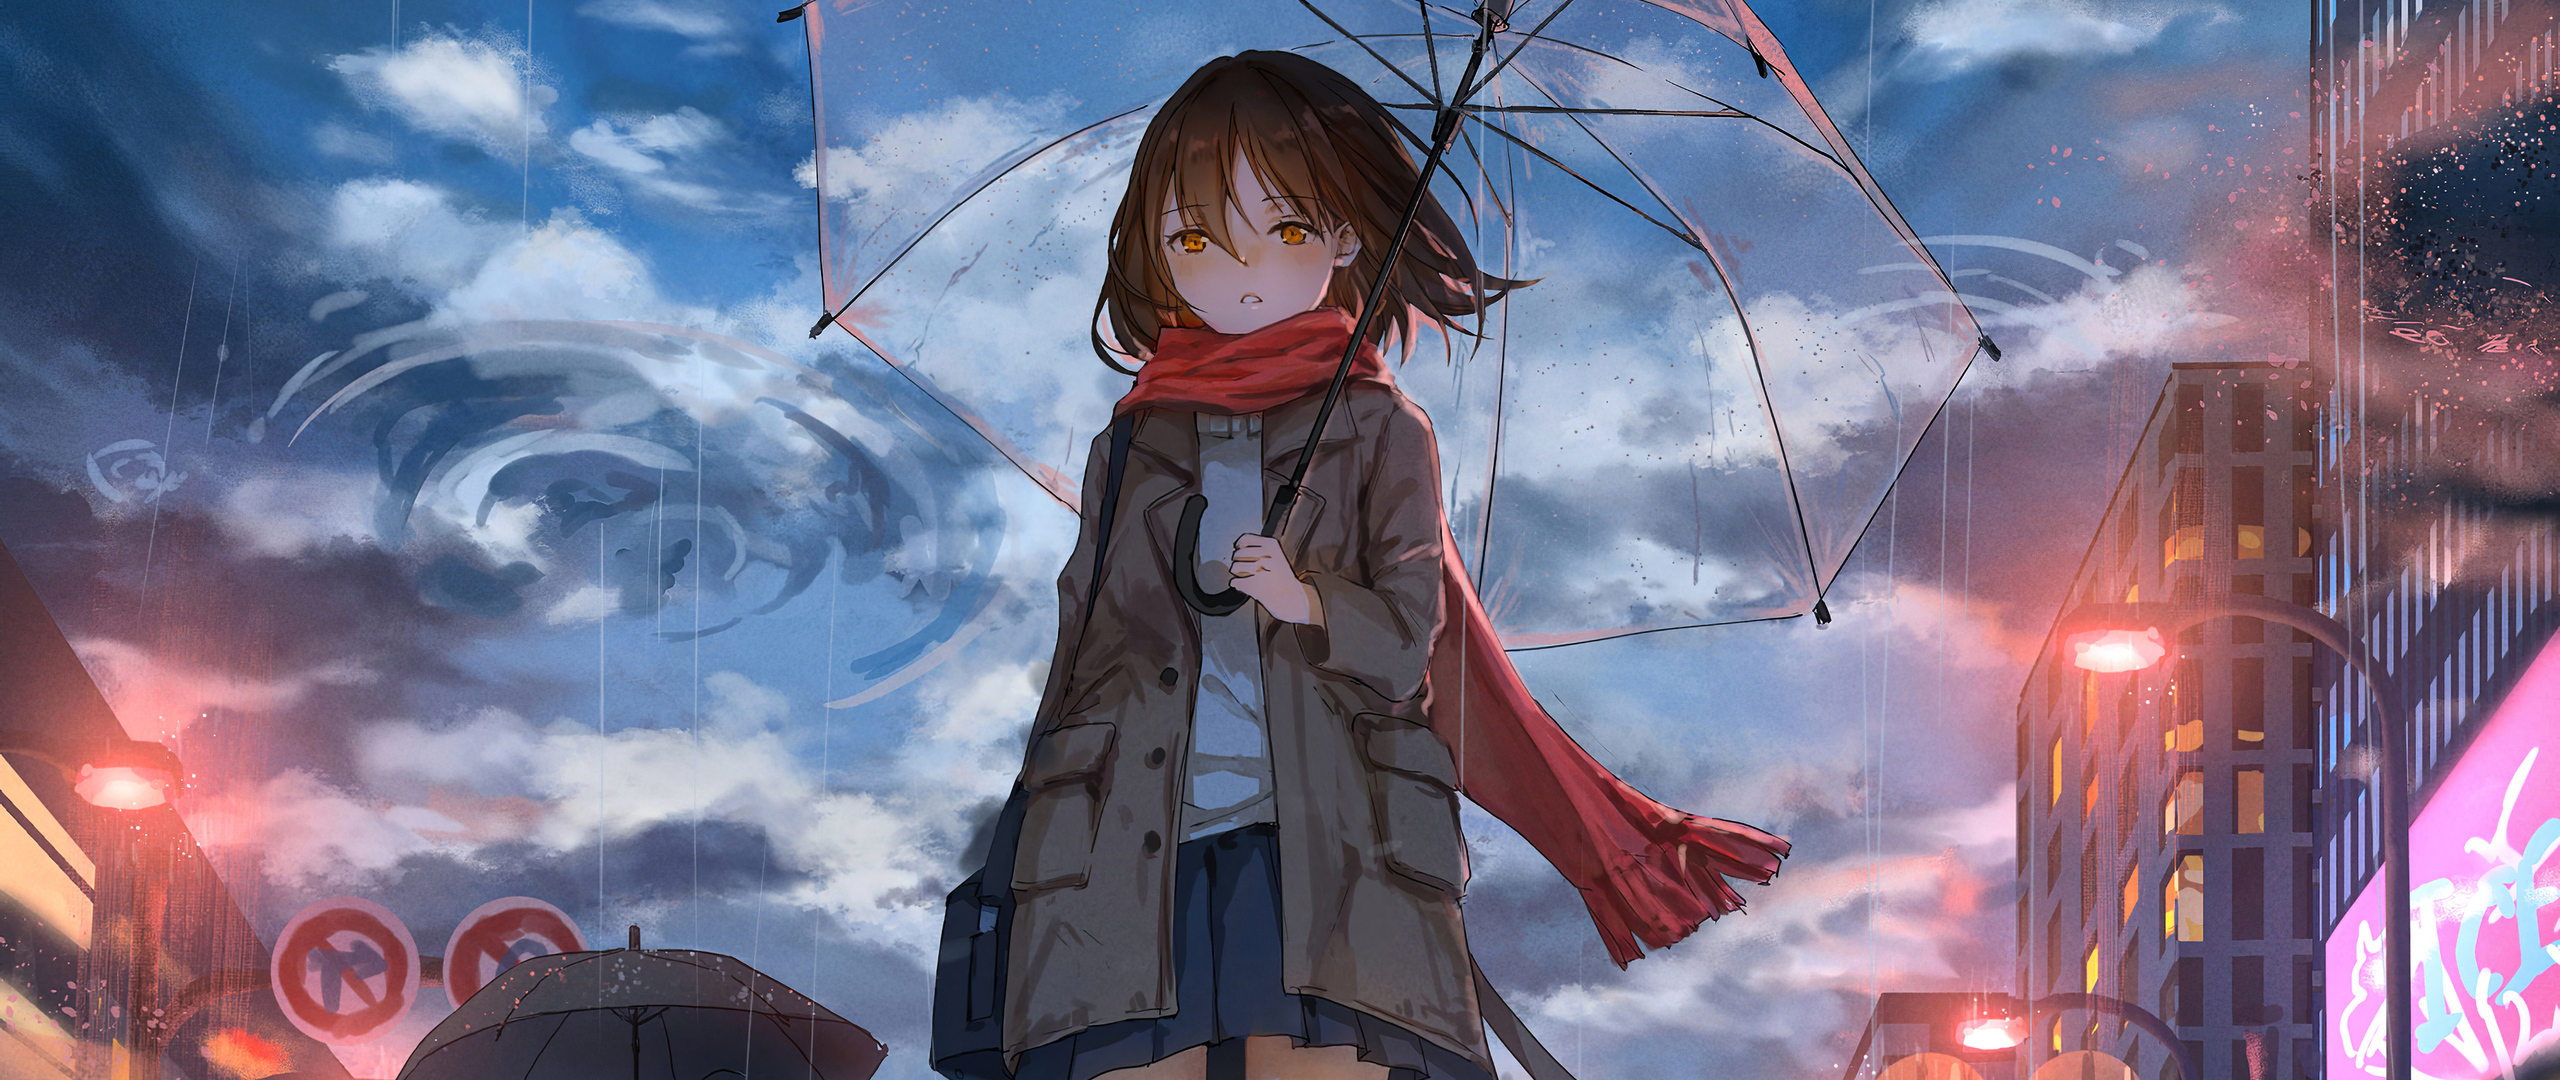 anime-girl-walking-in-rain-with-umbrella-4k-bj-2560x1080.jpg